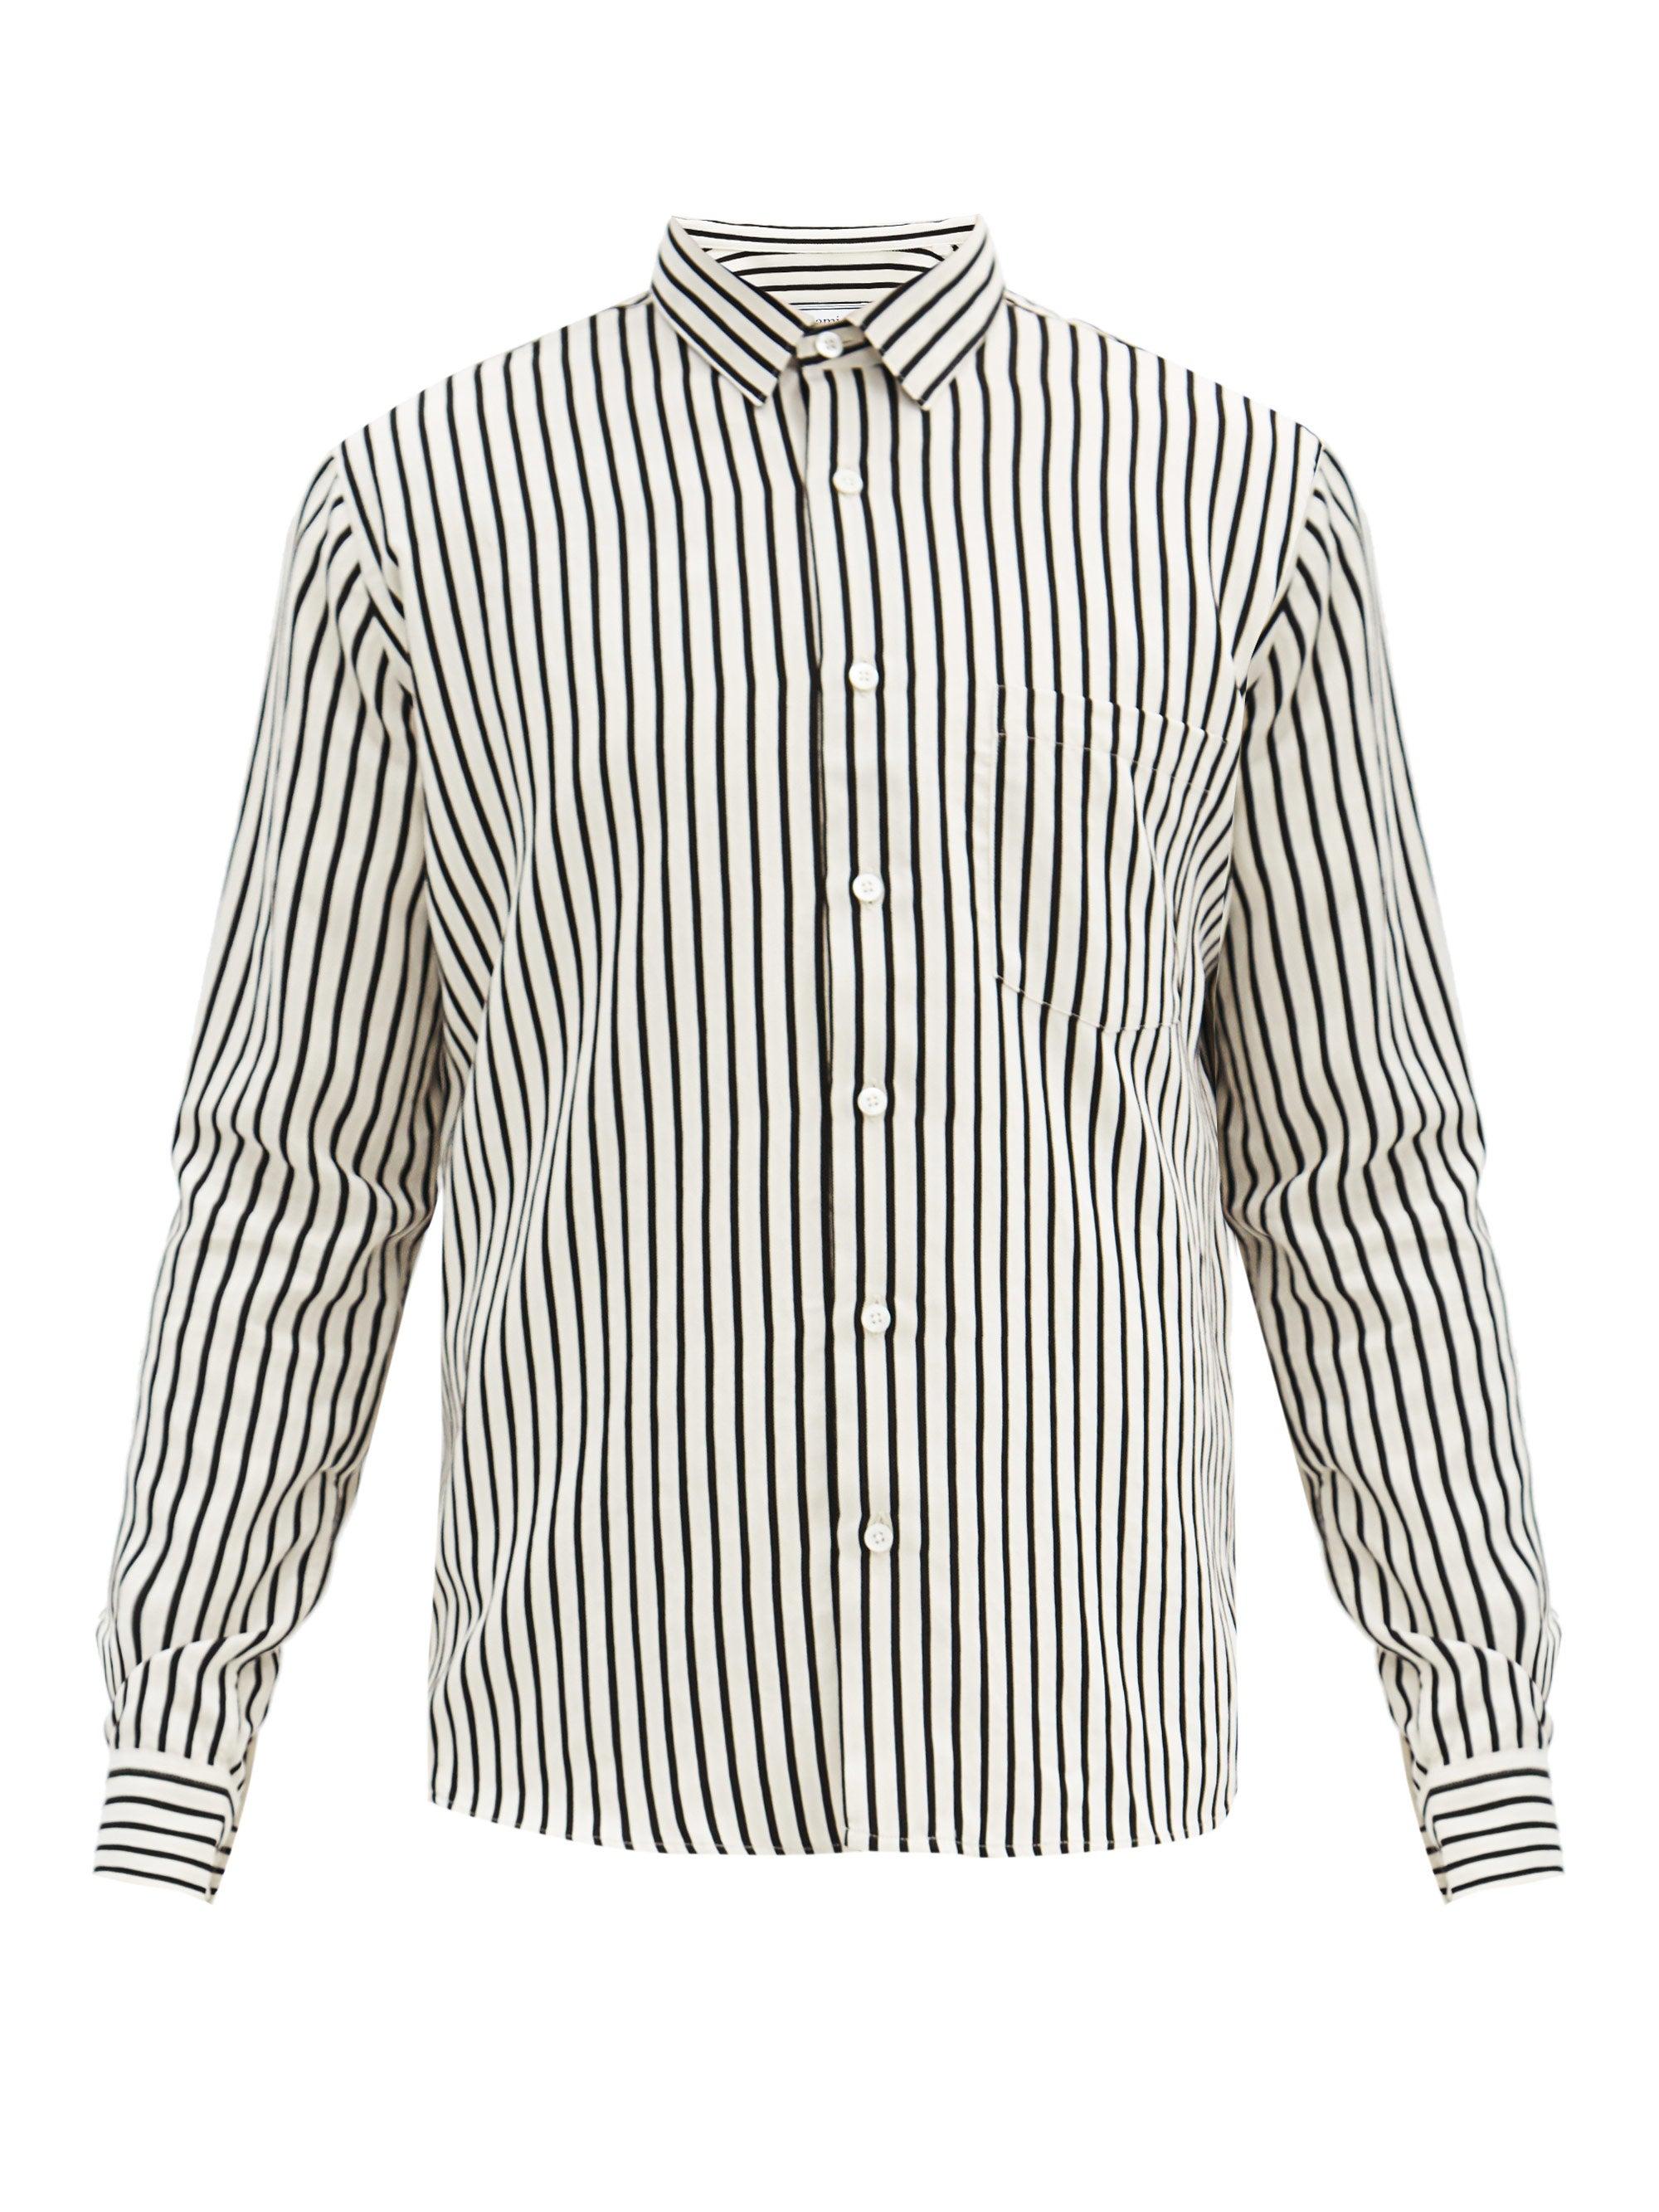 AMI Striped Twill Shirt for Men - Lyst